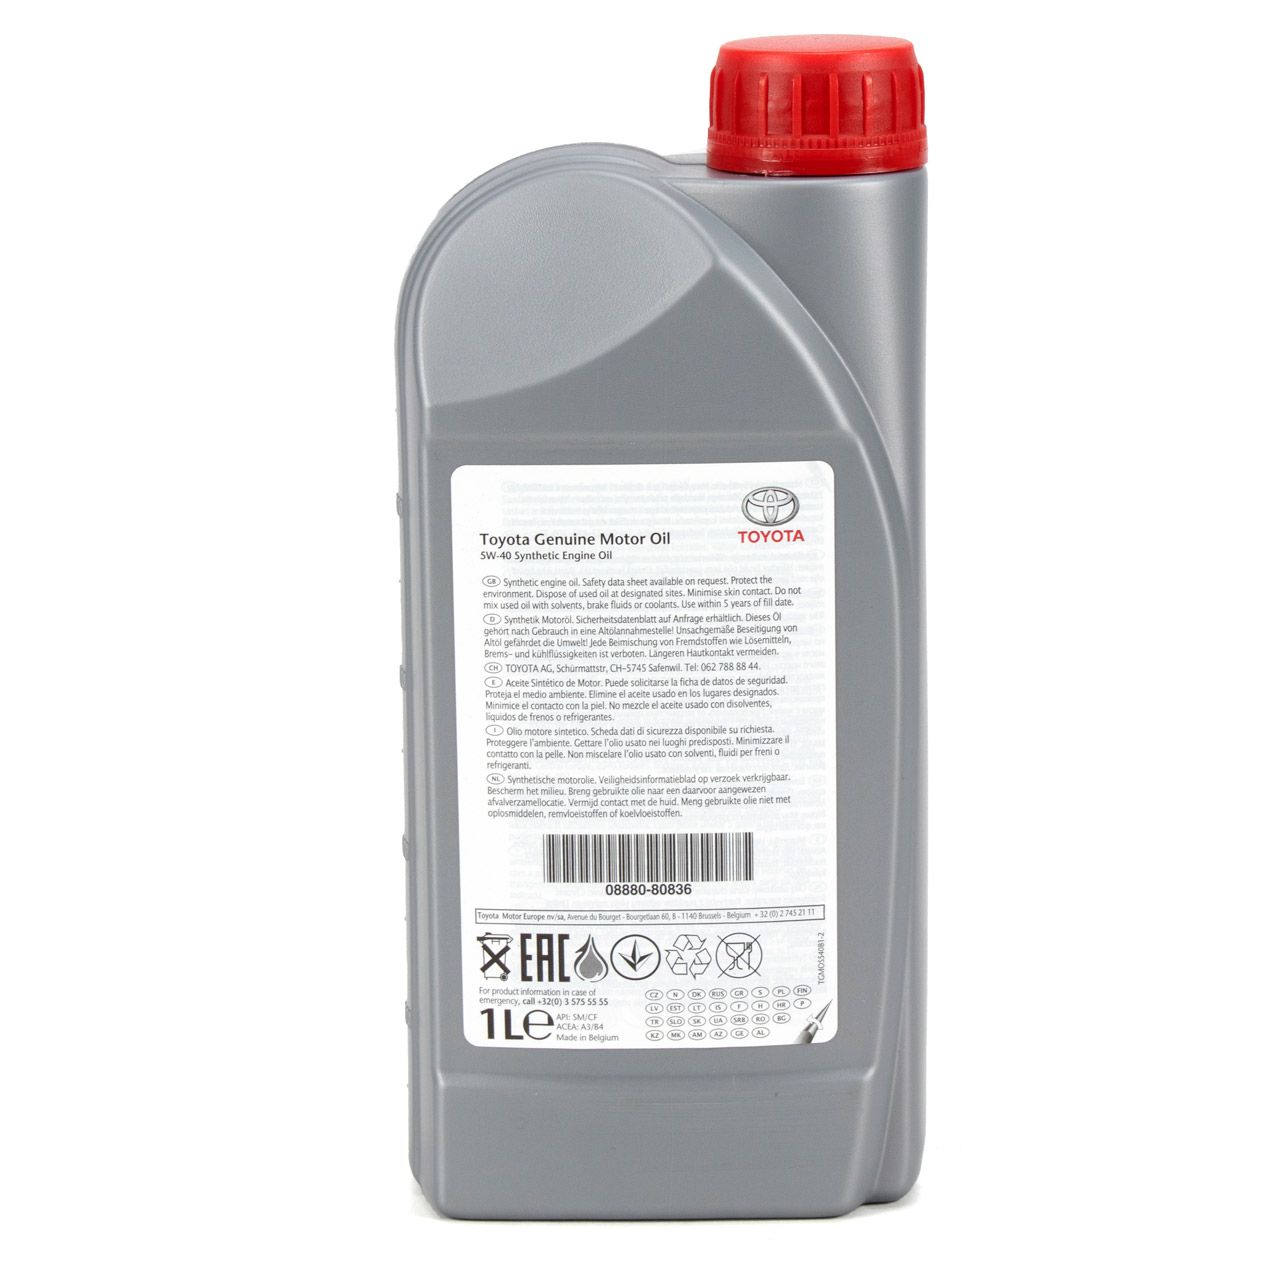 1L 1 Liter ORIGINAL Toyota Motoröl Öl SYNTHETIC 5W-40 API SM / CF 08880-80836